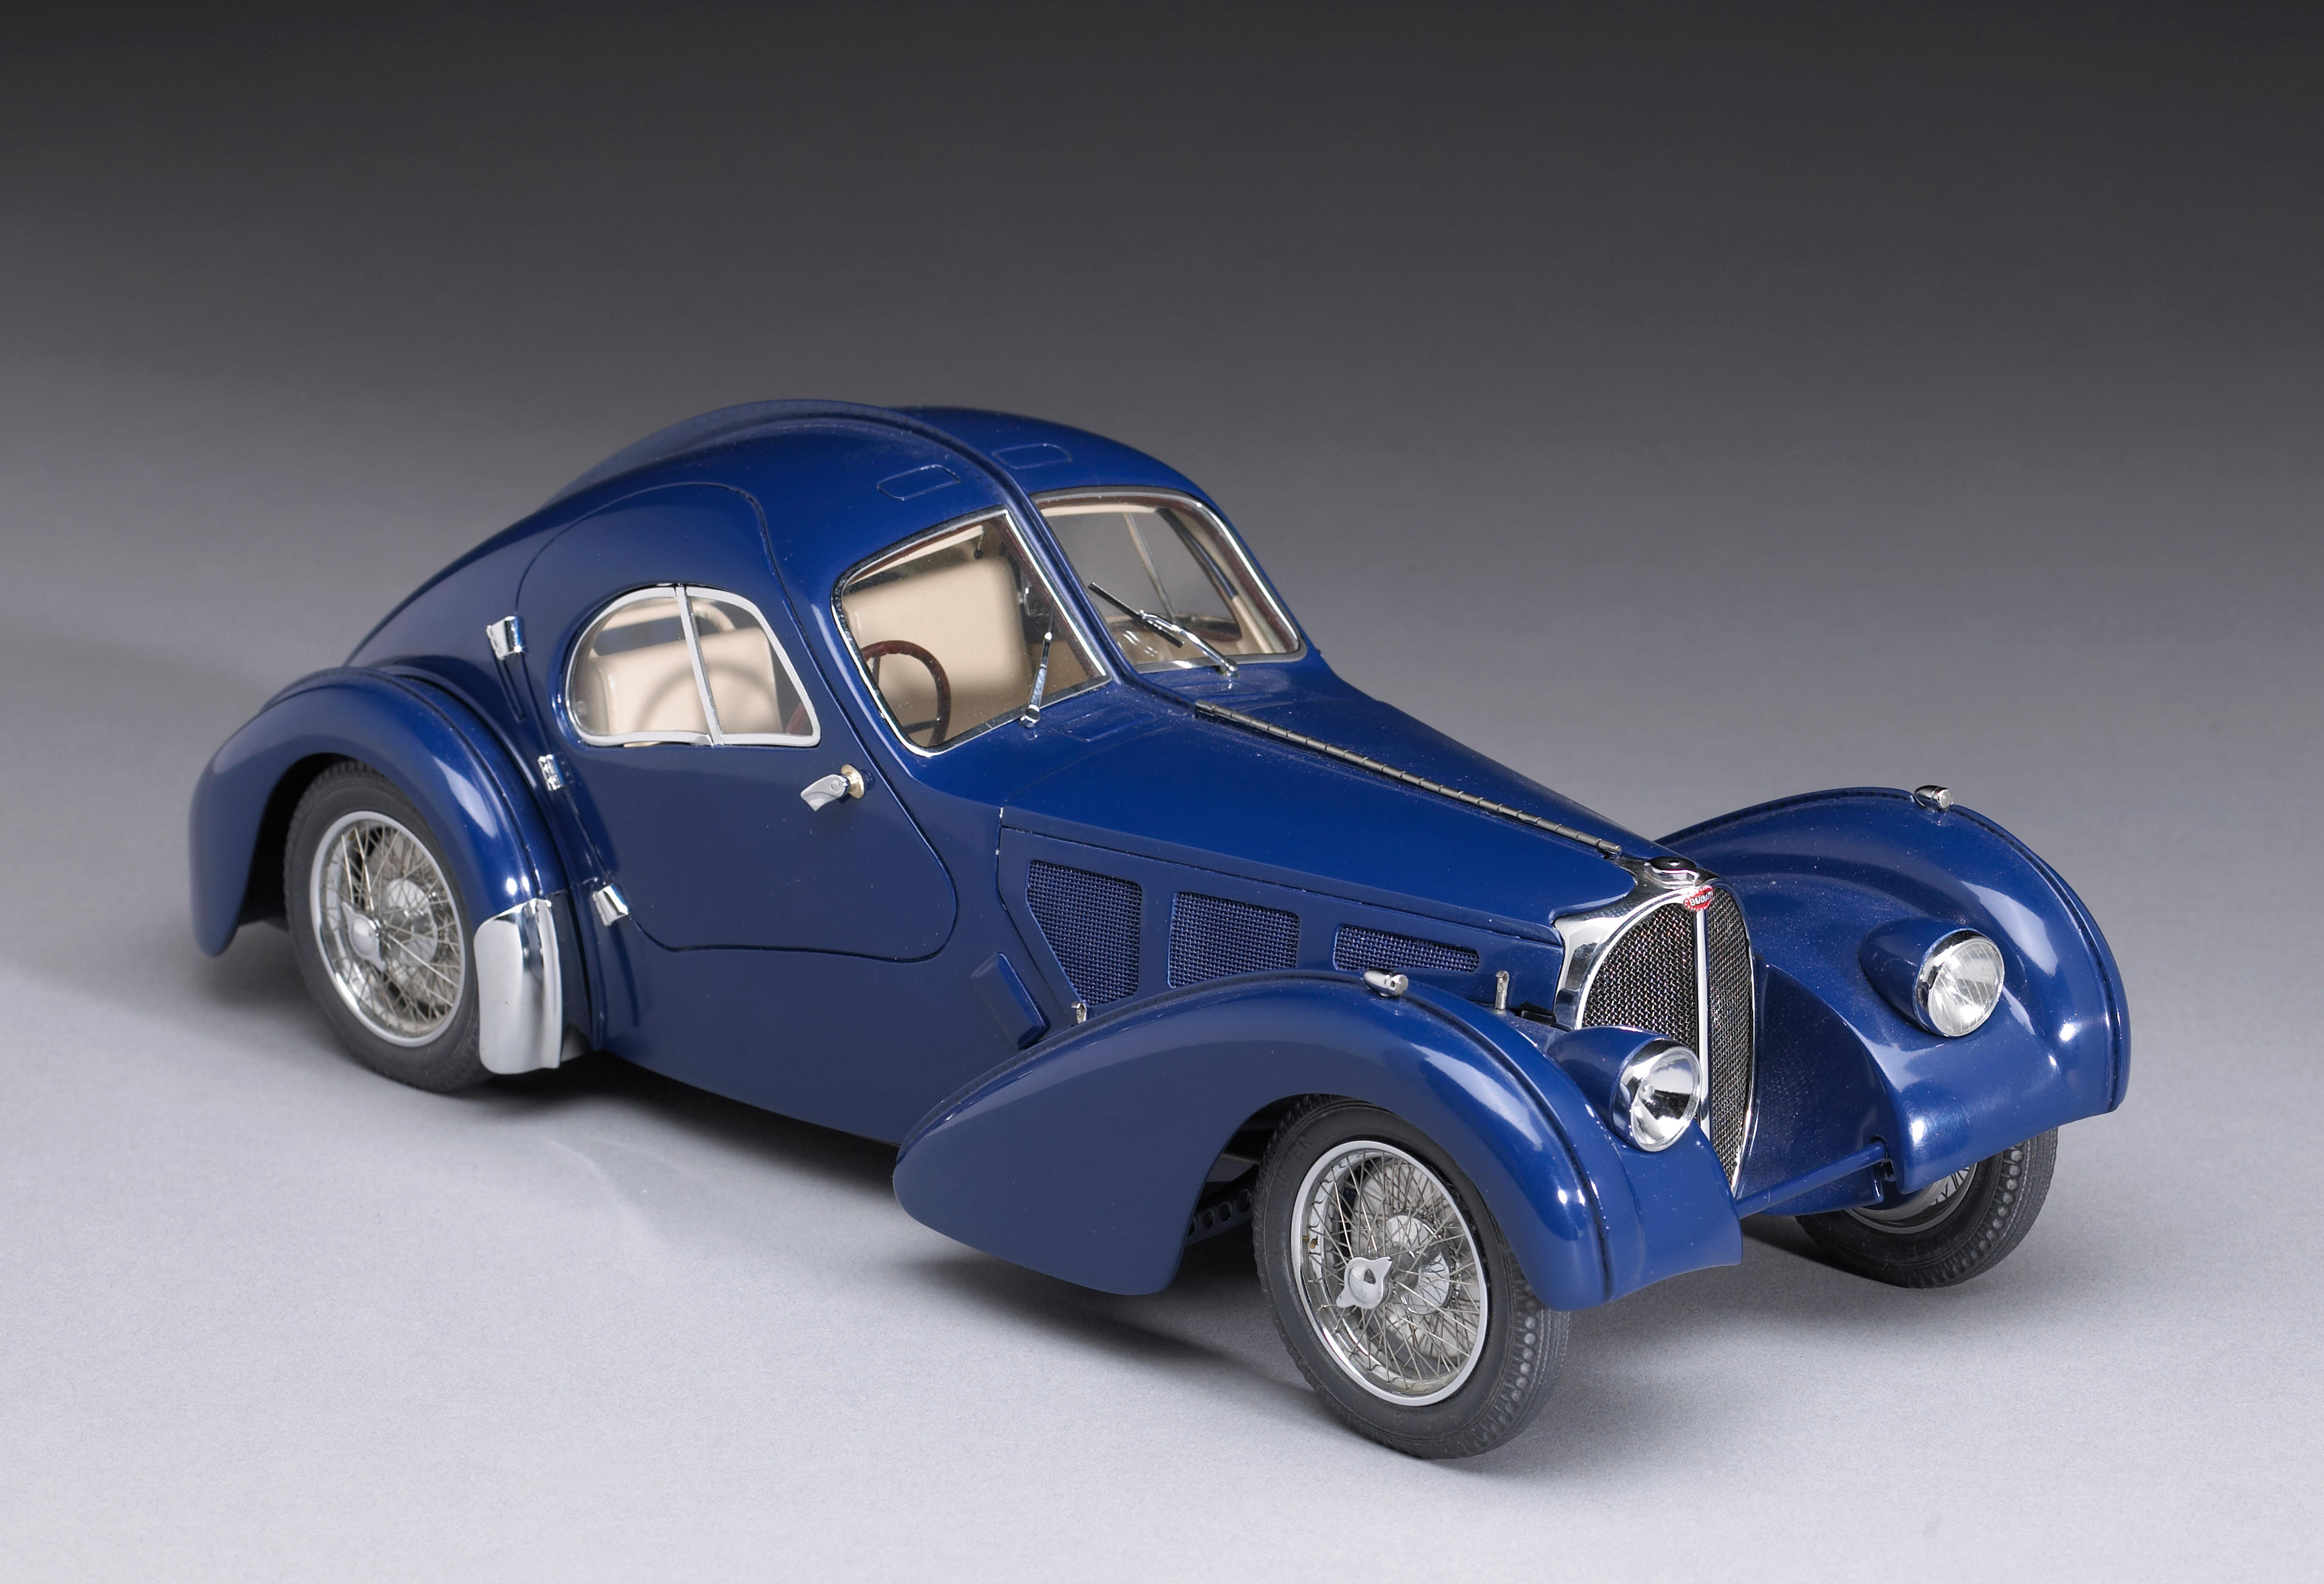 Bonhams Cars : A 115 scale model of 1938 Bugatti type 57sc 'Atlantic ...